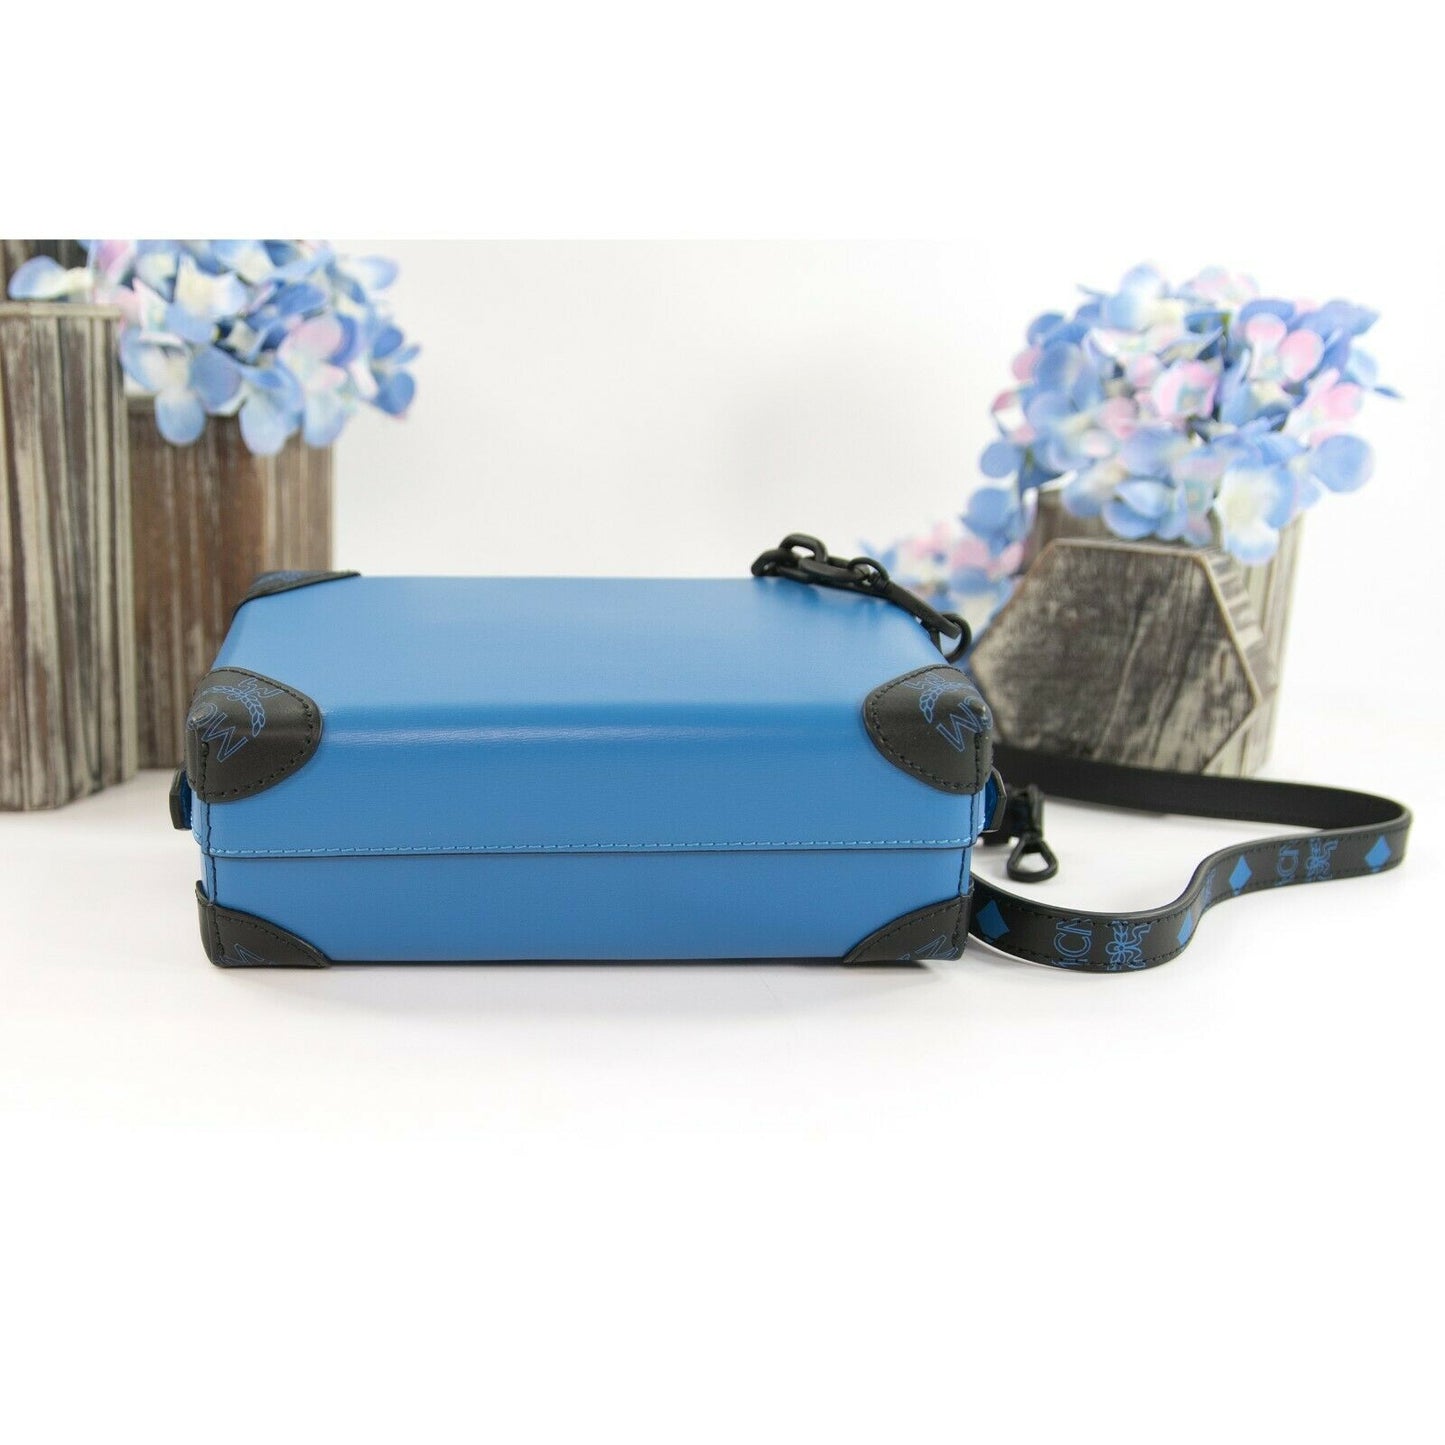 MCM Vallarta Blue Leather Soft Berlin Mini Convertible Crossbody Bag NWT